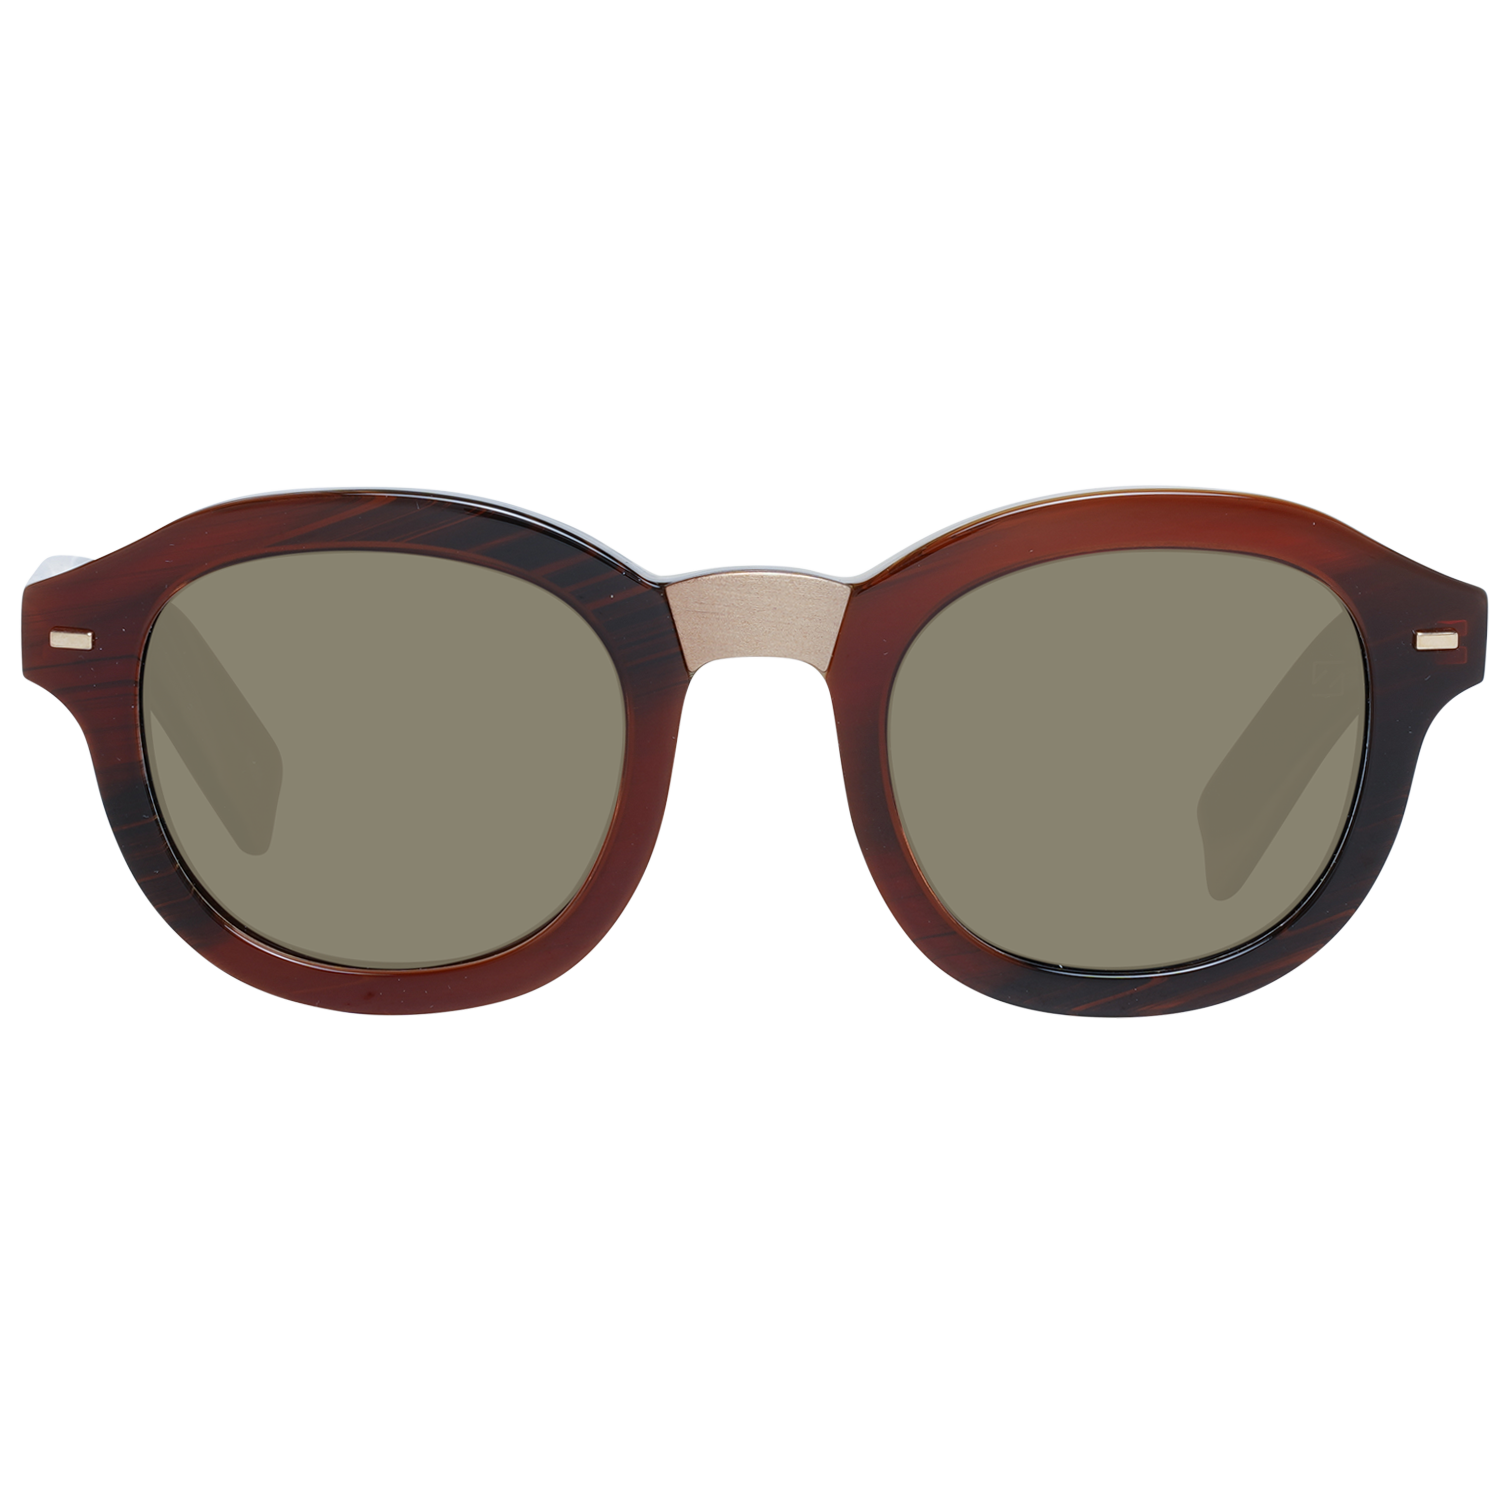 Zegna Couture Sunglasses Zegna Couture Sunglasses ZC0011 47 47E Eyeglasses Eyewear UK USA Australia 